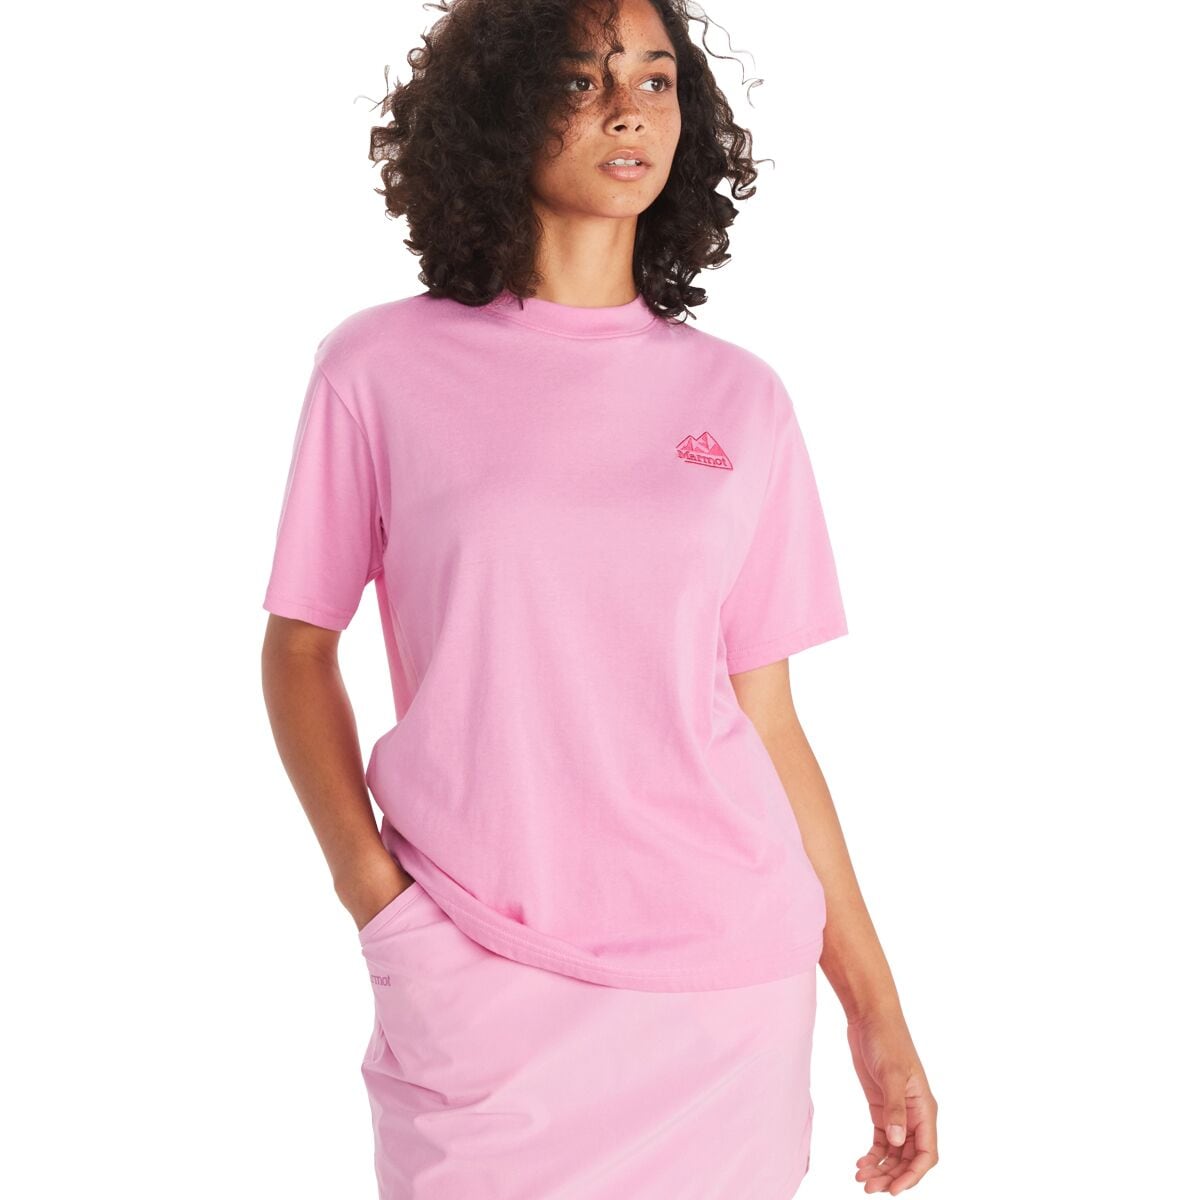 Marmot Peaks Short-Sleeve T-Shirt - Women's